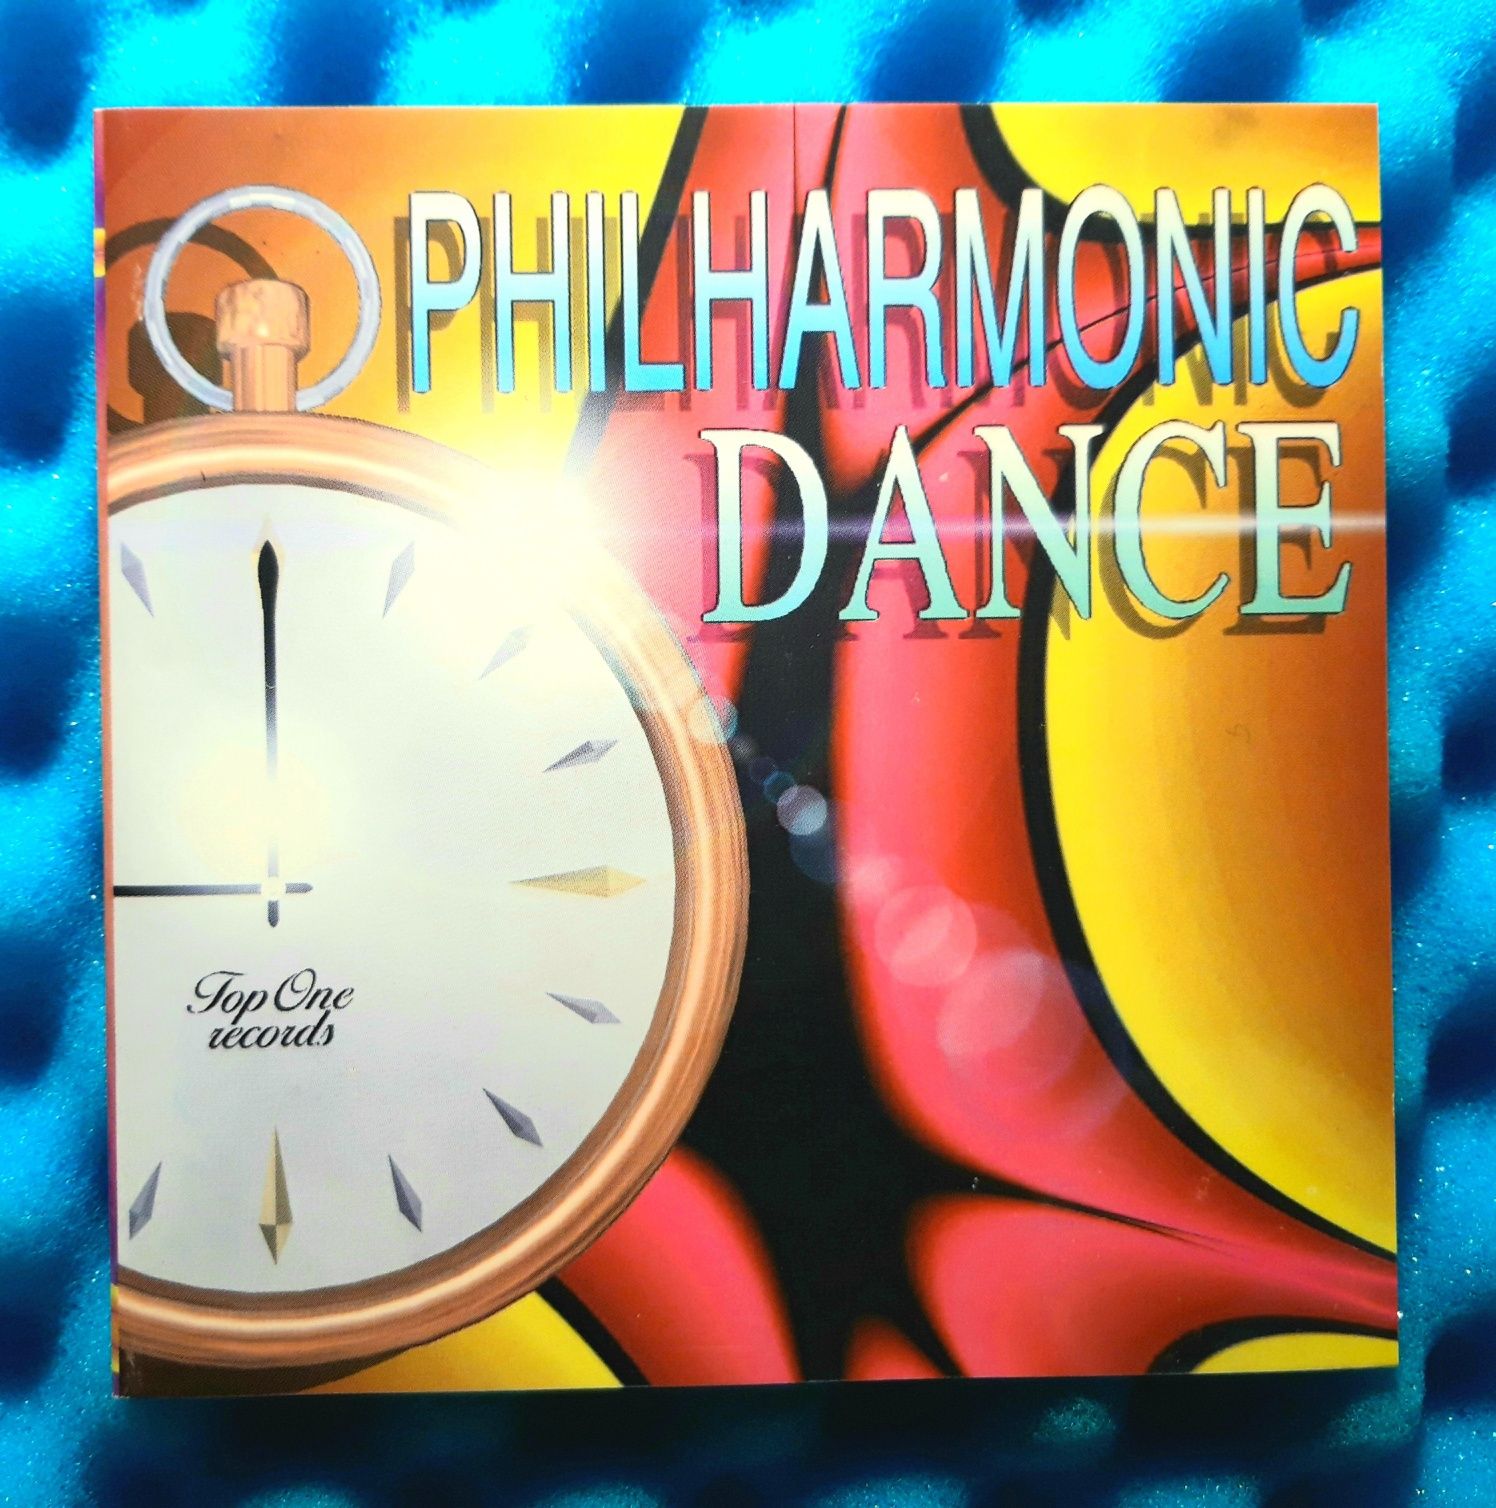 Philharmonic Dance – Philharmonic Dance (CD, 1995)